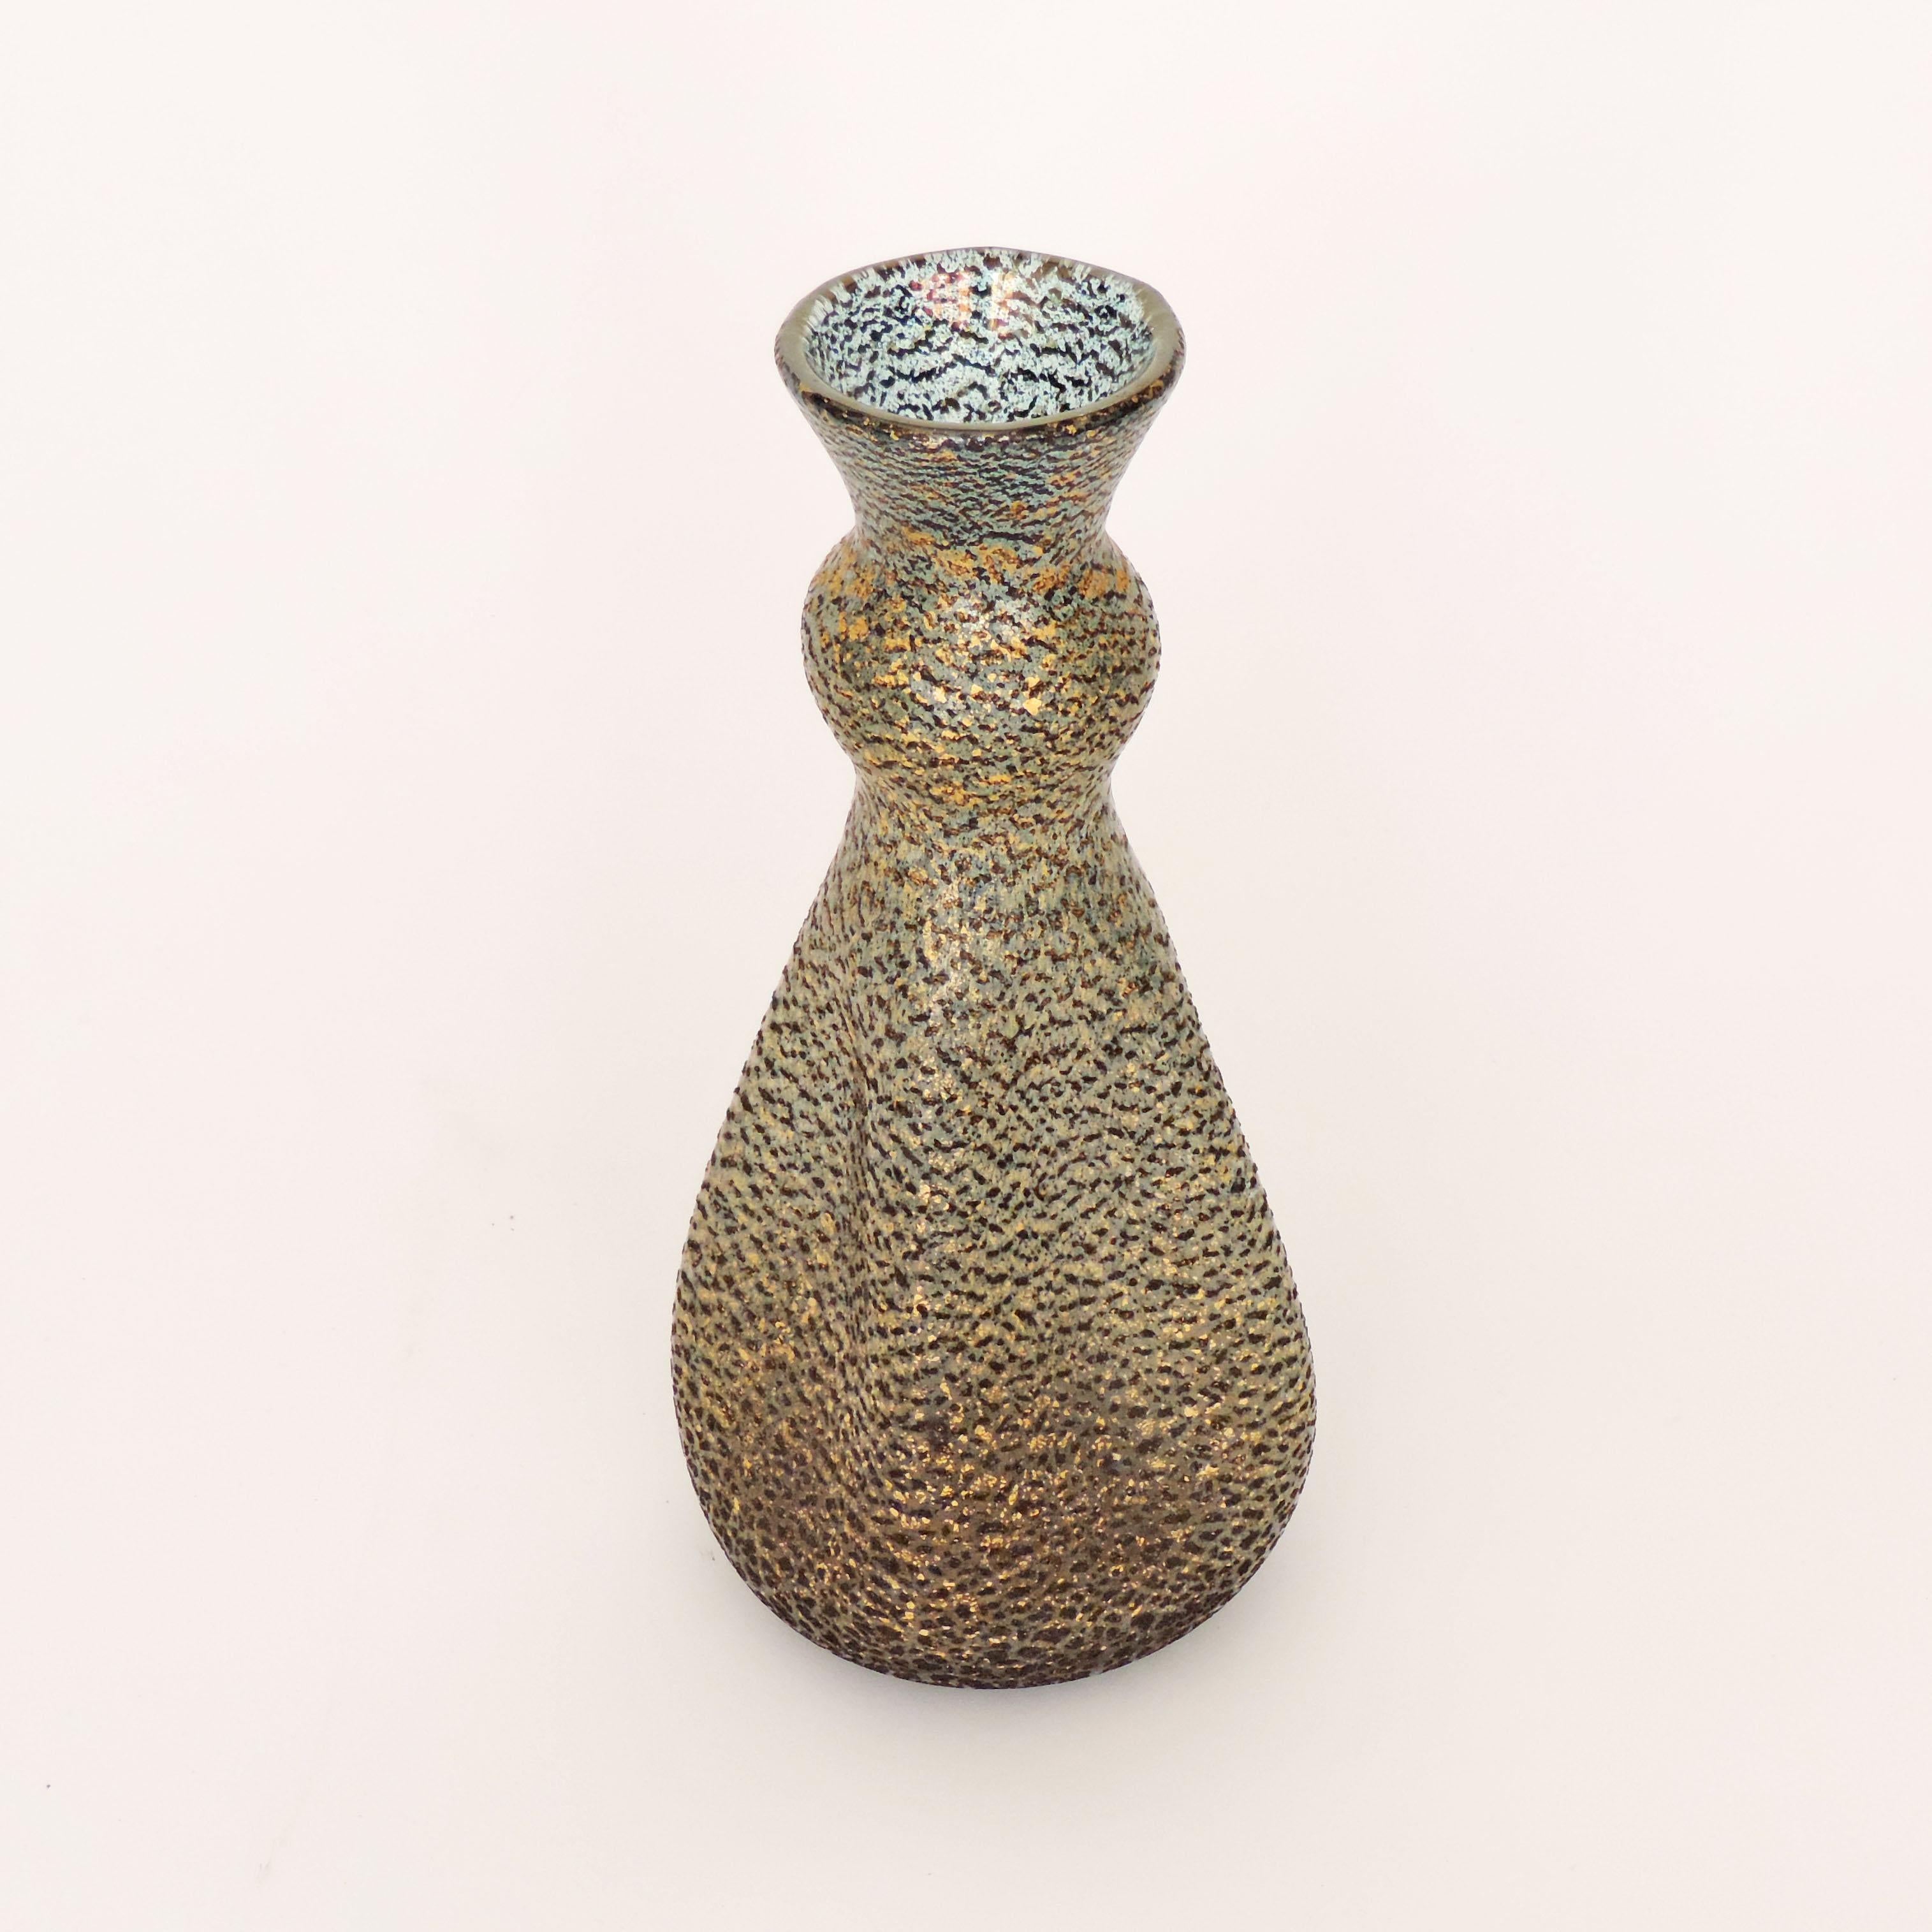 Barovier & Toso Barbarico Murano glass vase, Italy, 1950s.